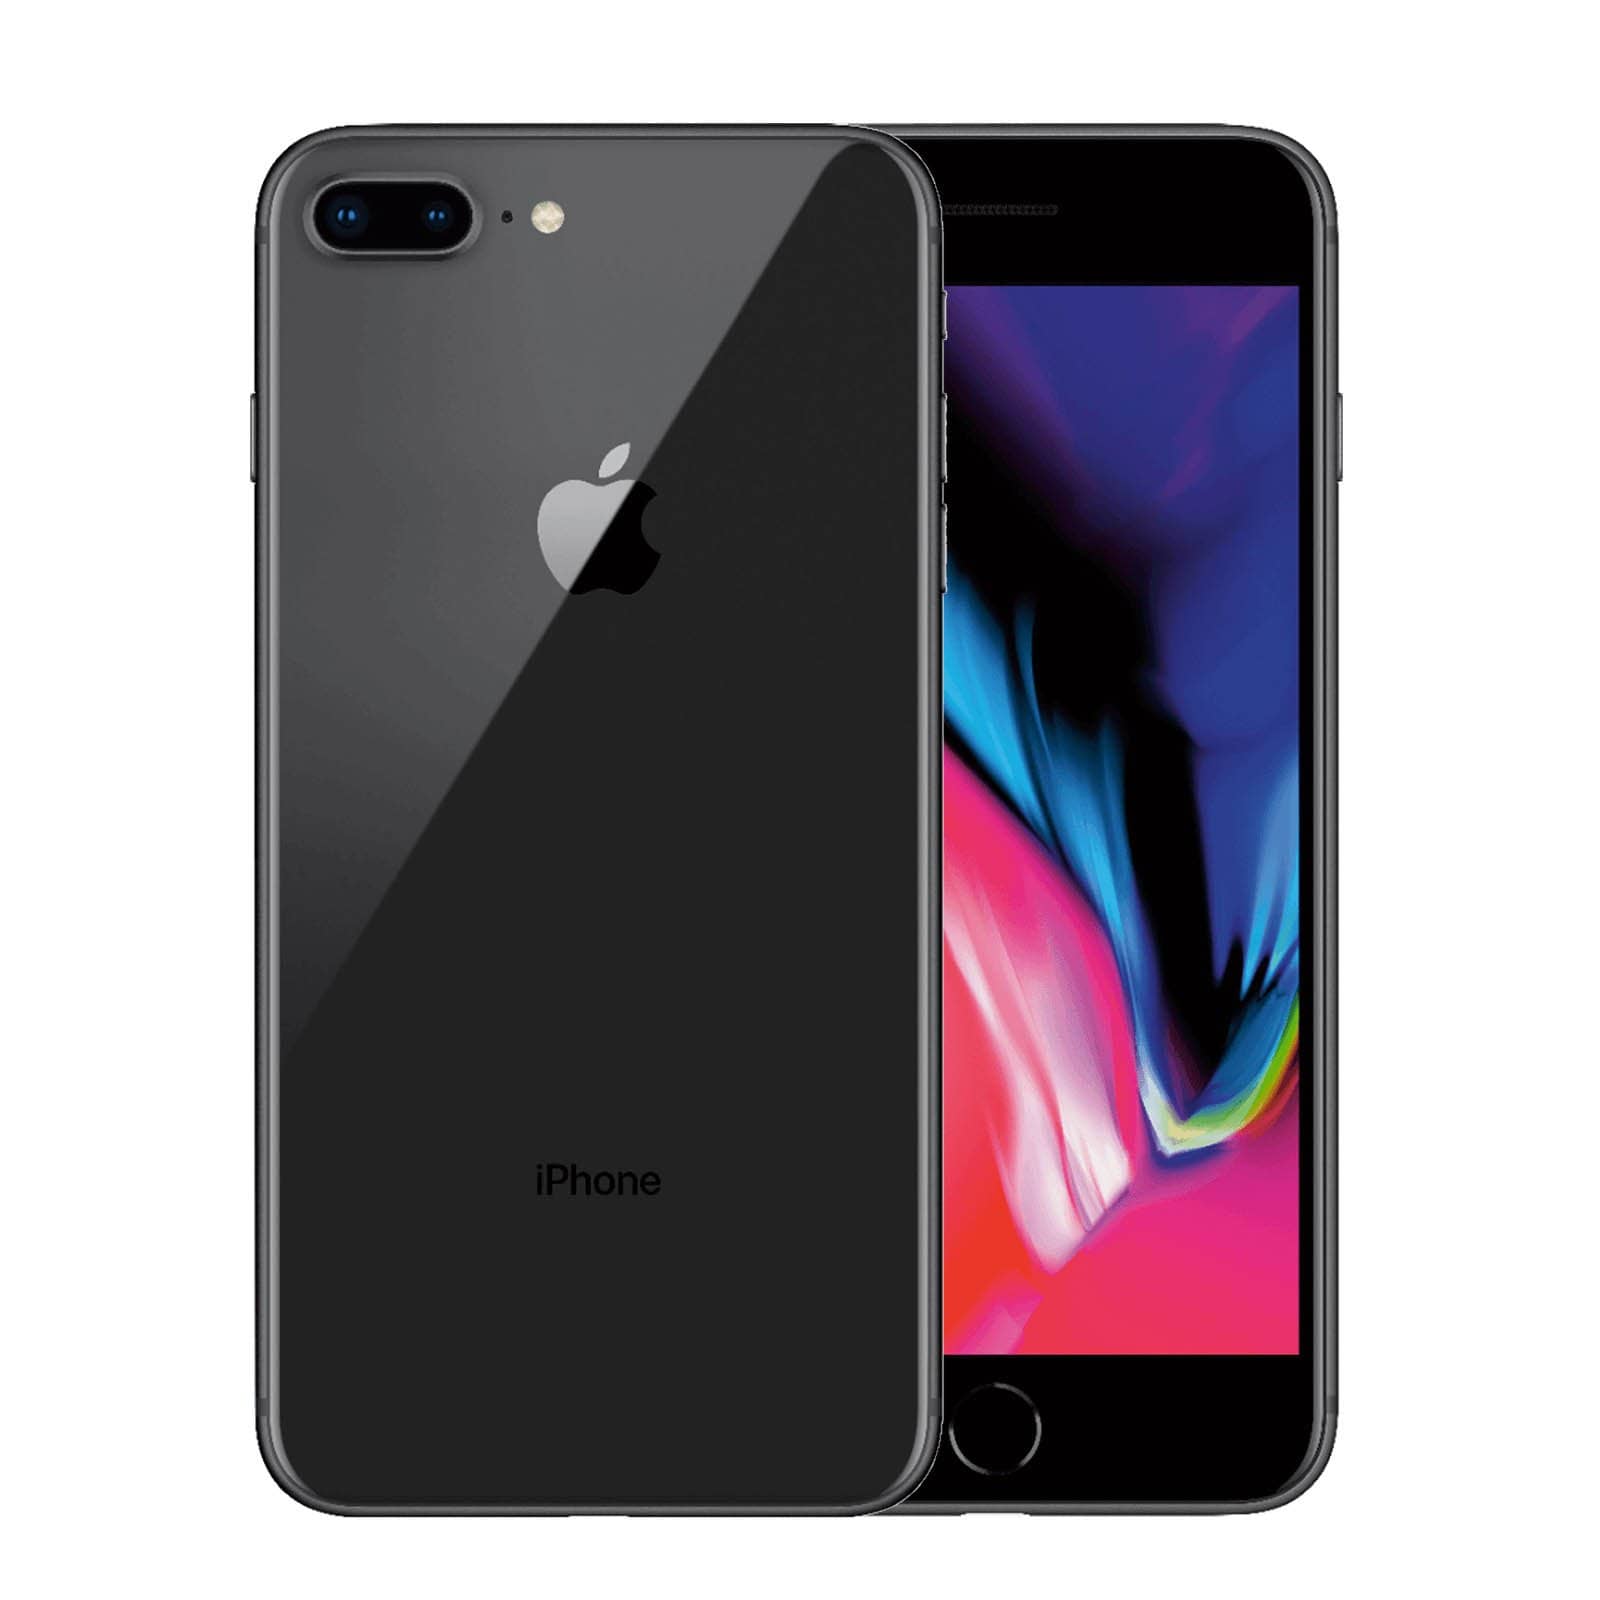 Apple iPhone 8 Plus 64GB Space Grey Fair - Unlocked 64GB Space Grey Fair